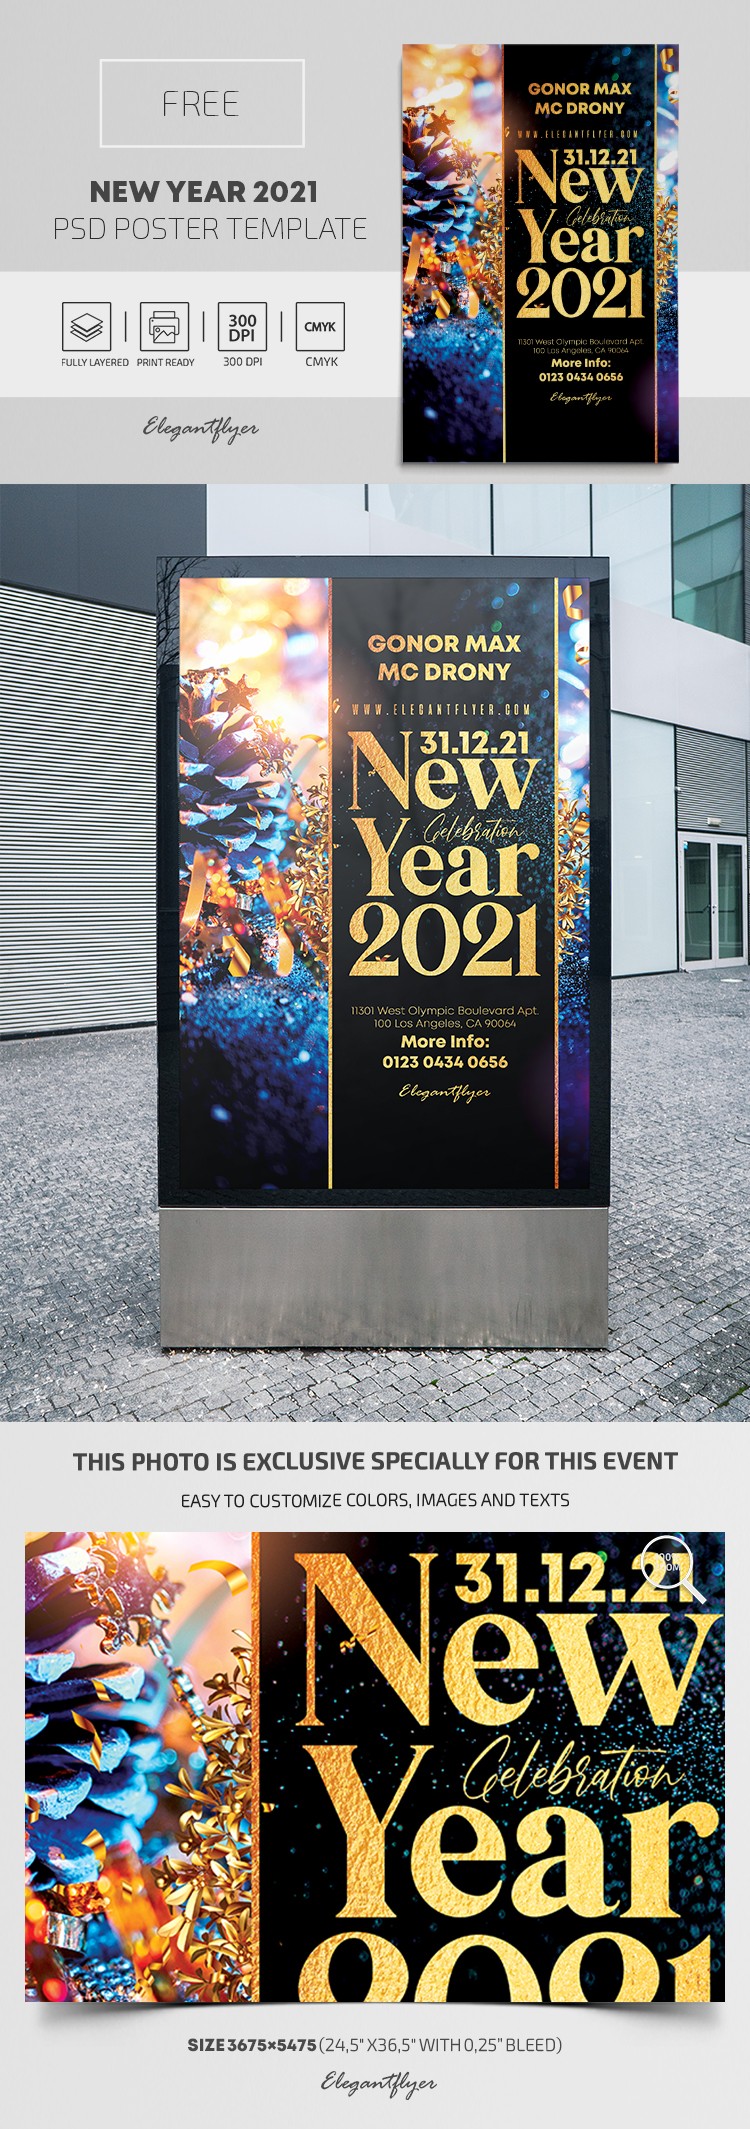 New Year 2021 Poster by ElegantFlyer